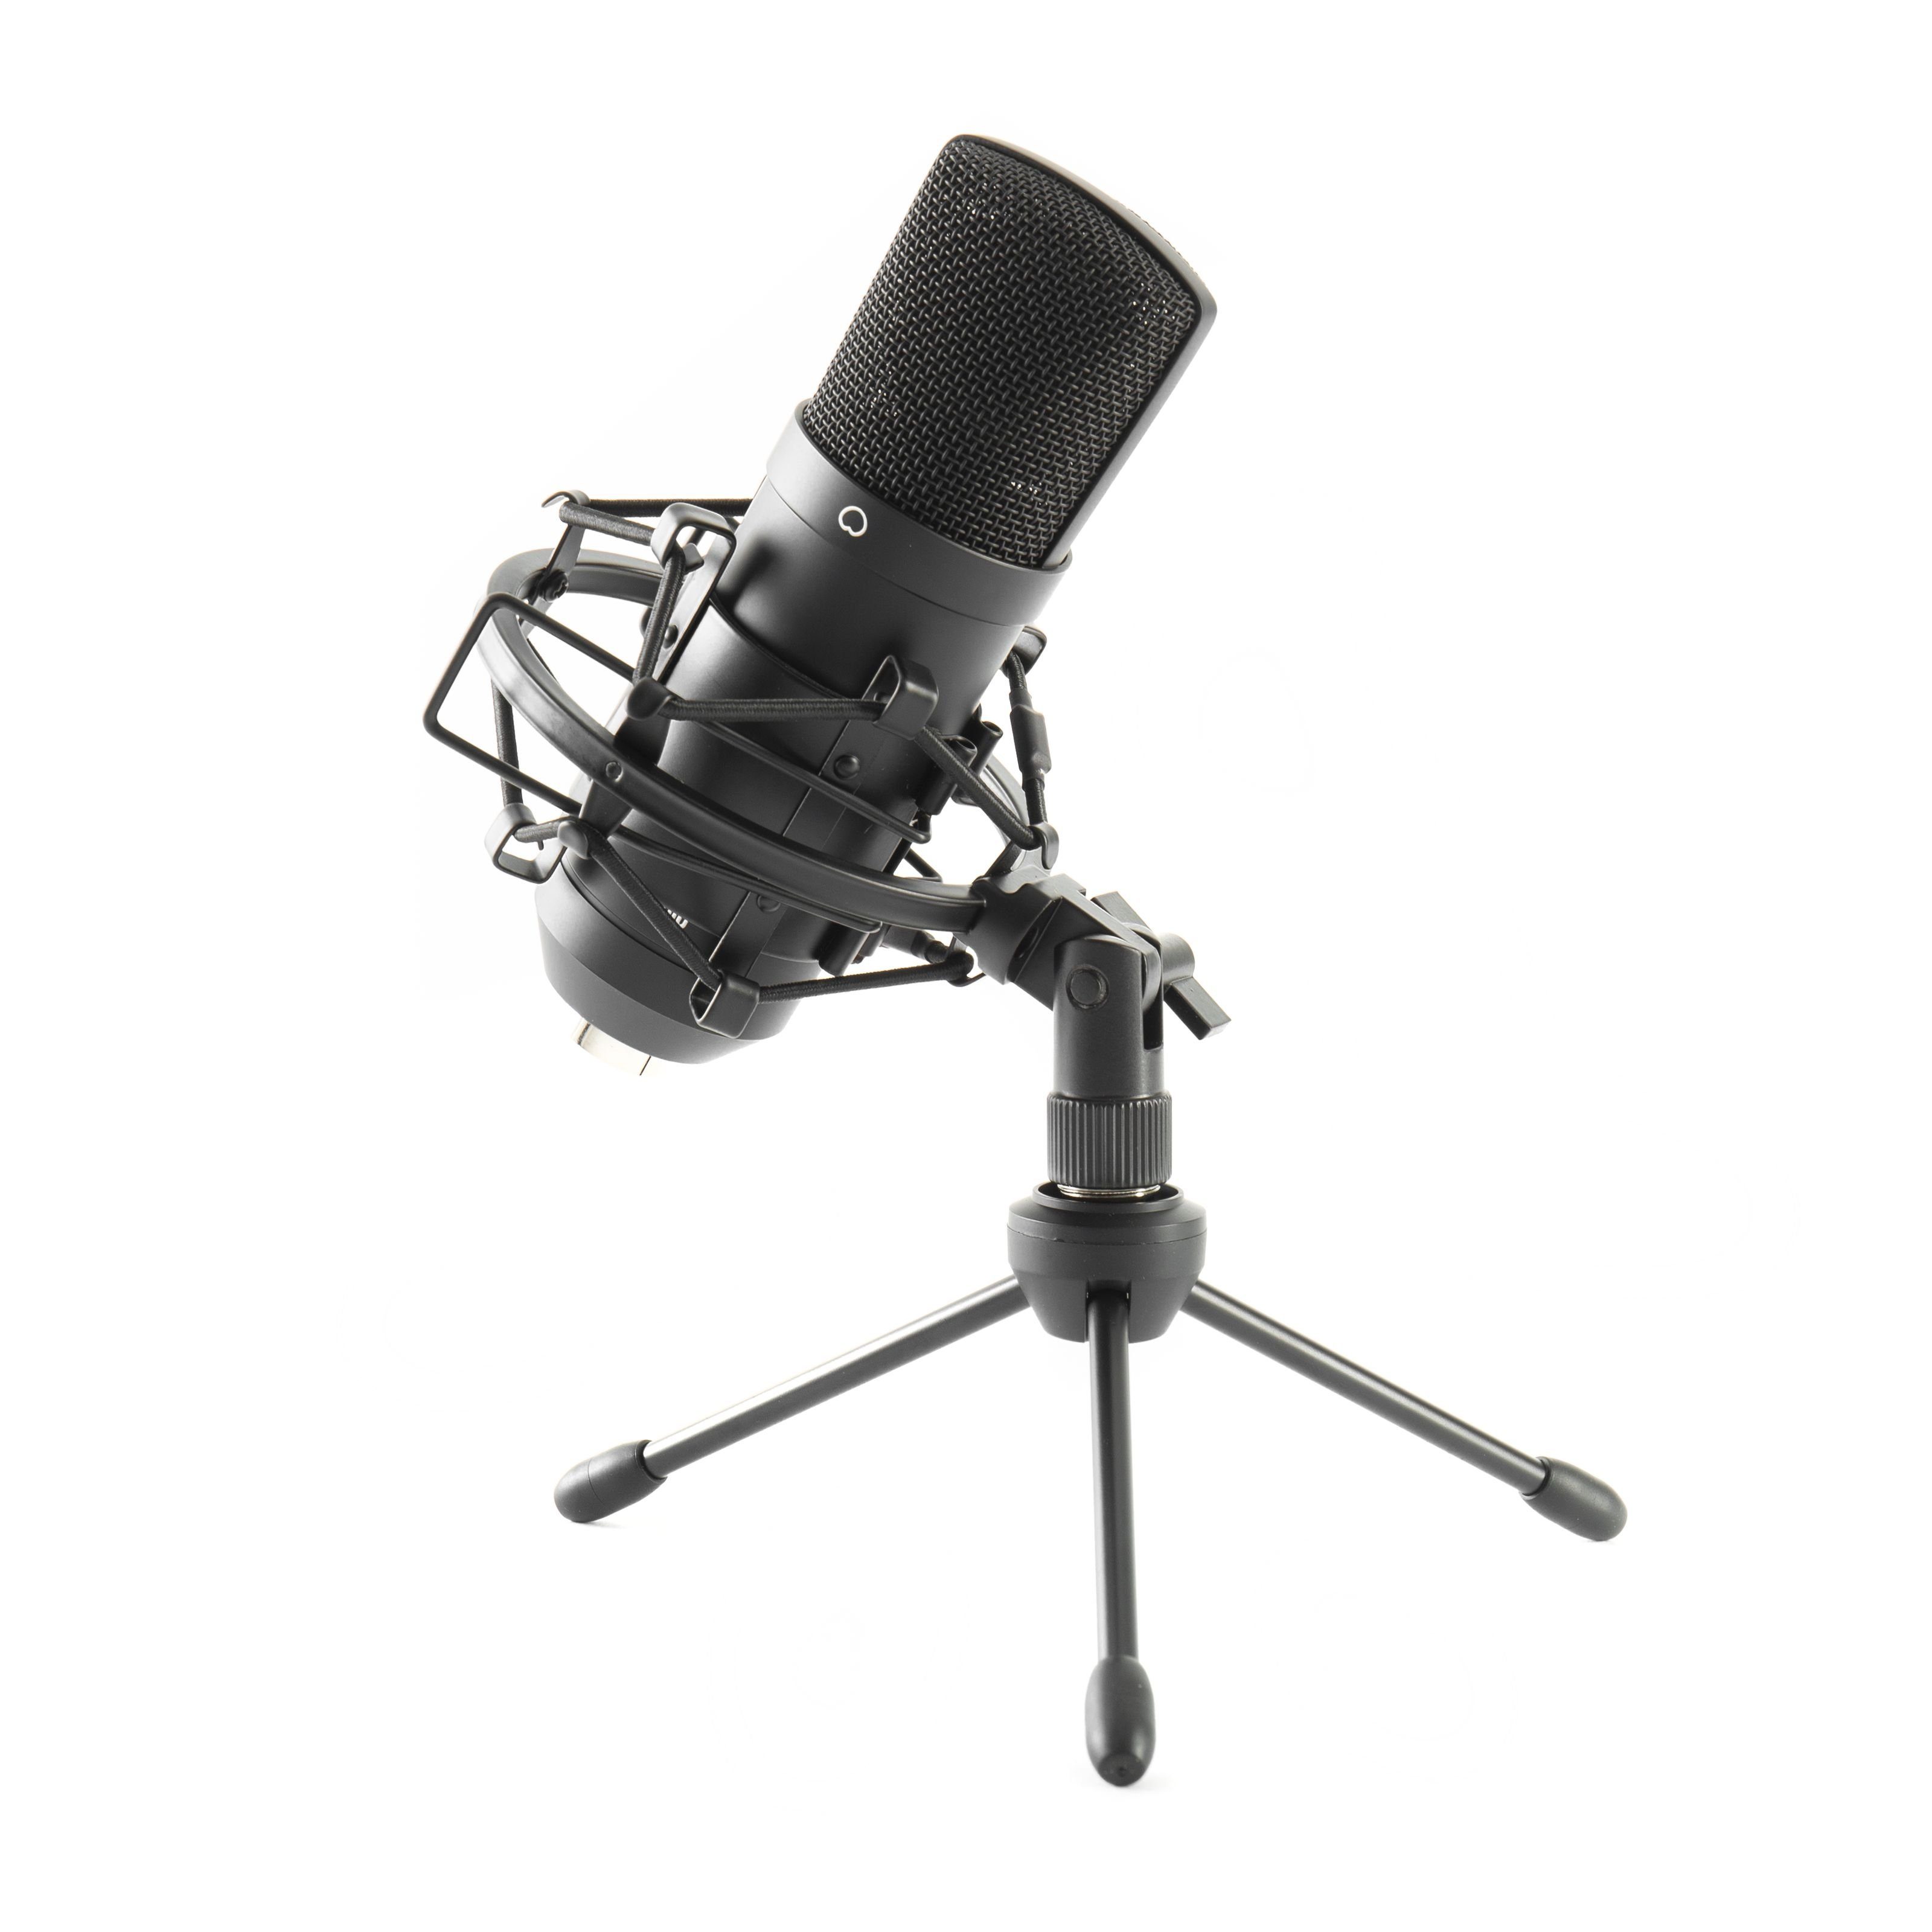 Fame Audio Mikrofon, Vocal Starter Kit - Großmembran Kondensatormikrofon  online kaufen | OTTO